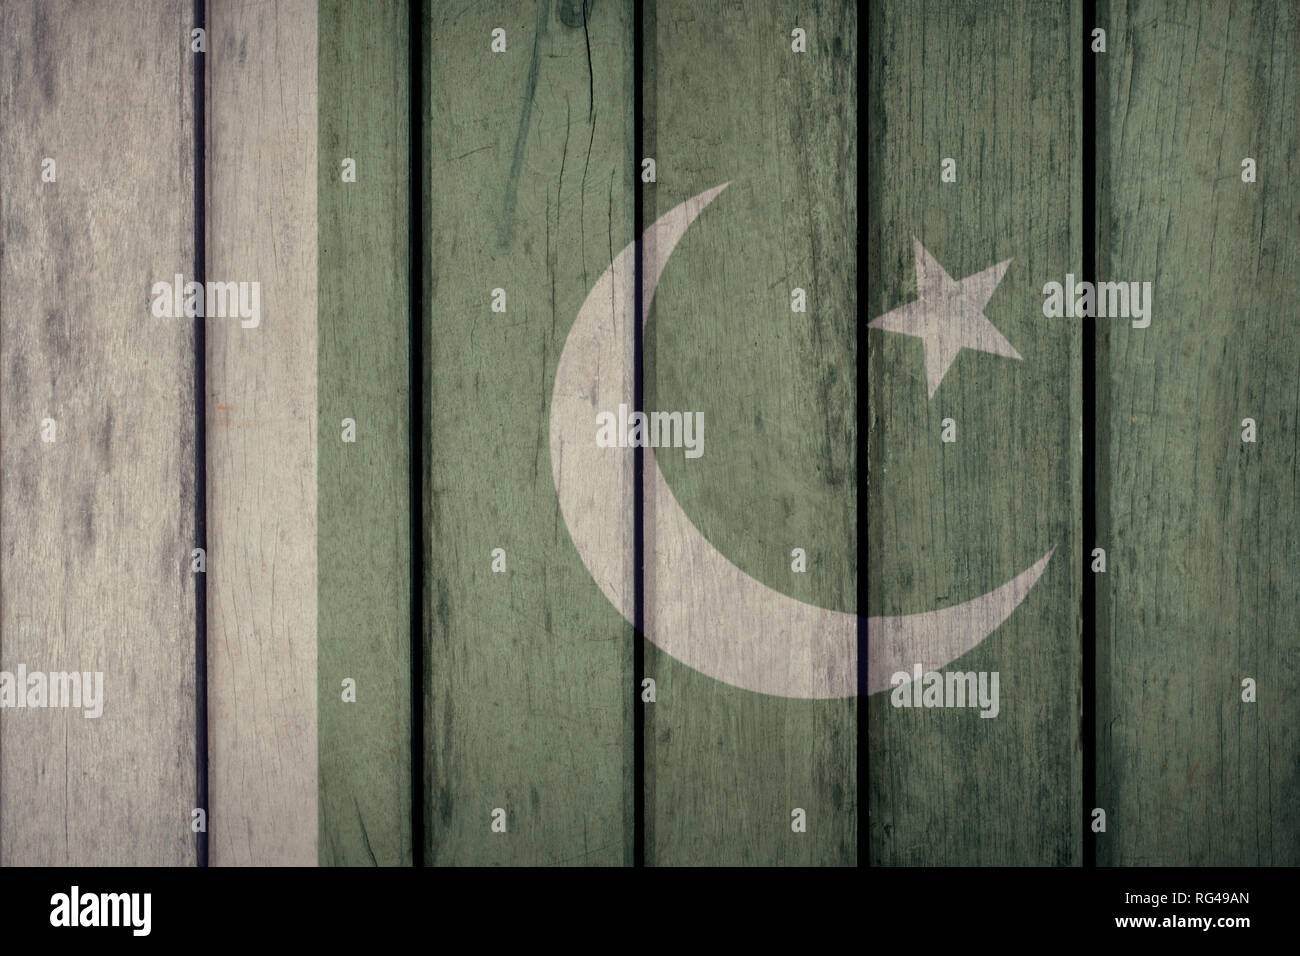 Pakistan Politics News Concept: Pakistani Flag Wooden Fence Stock Photo